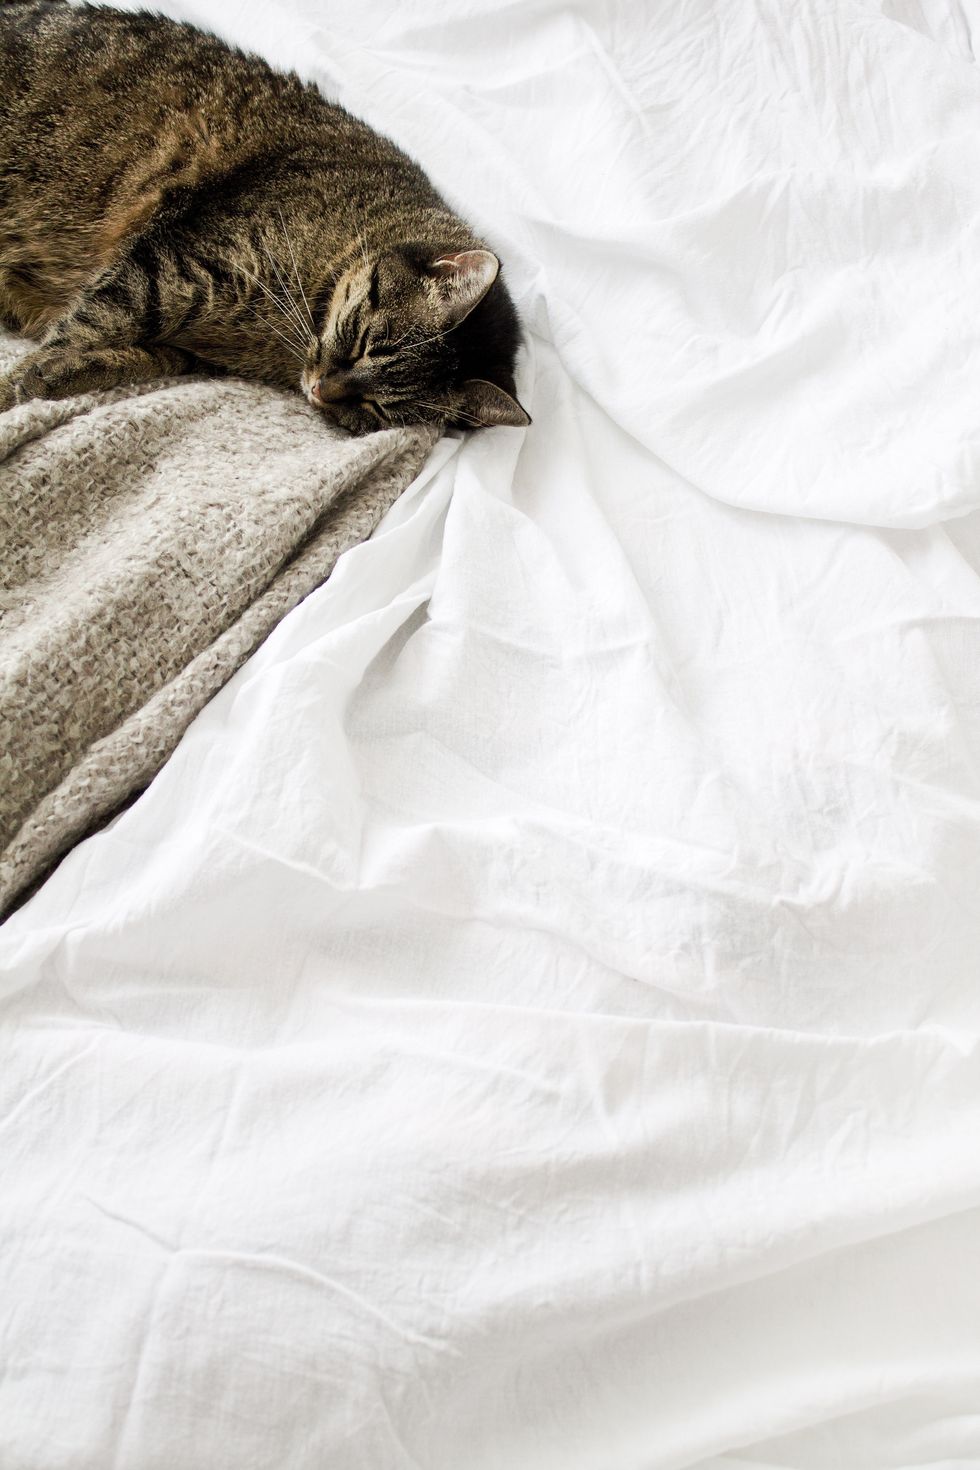 White, Bed sheet, Fur, Cat, Textile, Bedding, Linens, Bed, Room, Felidae, 